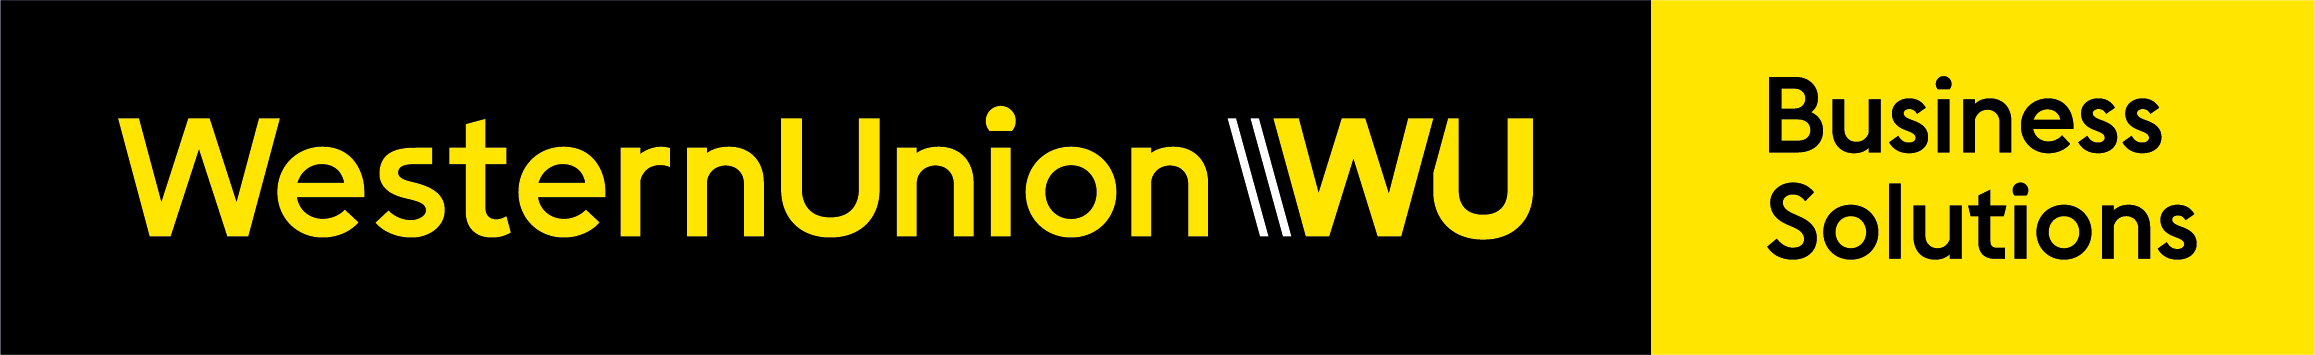 Western_Union_WUBS_Business Solutions_Black box_Horizontal.jpg